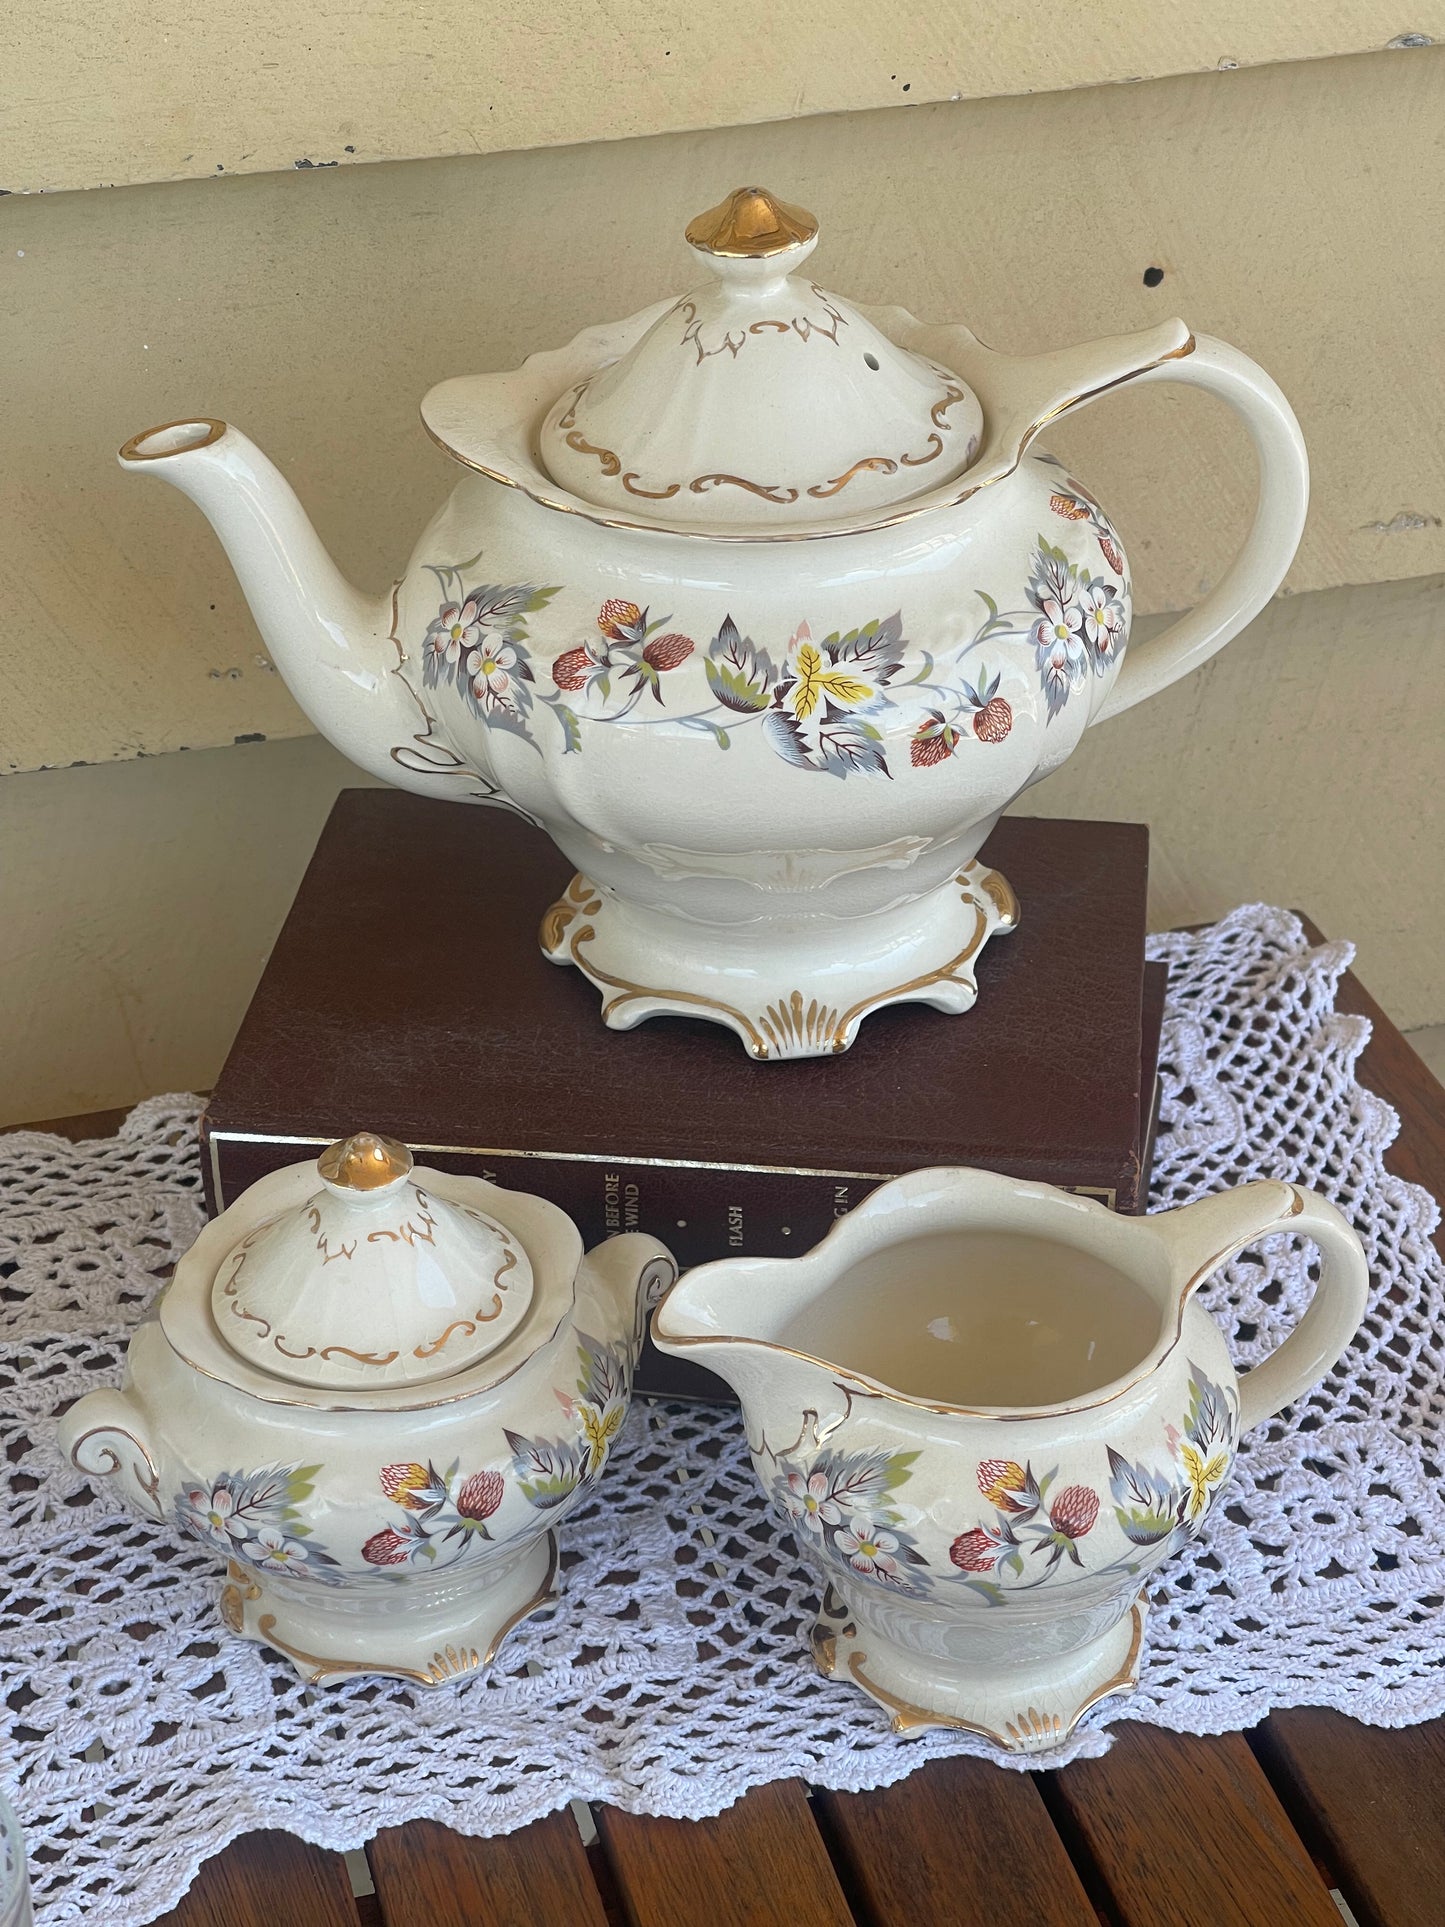 Vintage 1950s Sadler Tea Pot, milk jug and sugar bowl with berries and flowers